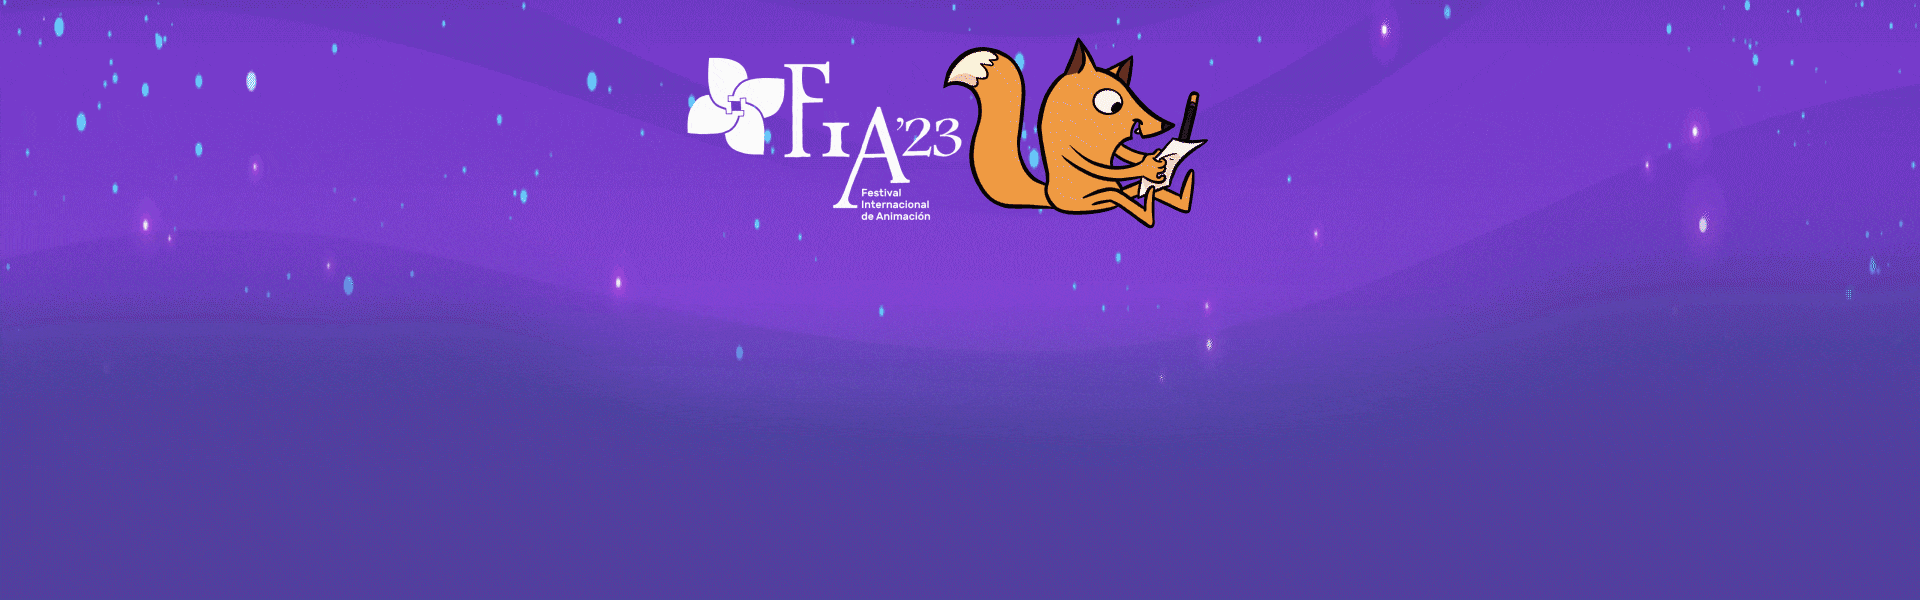 Festival Internacional de Animación